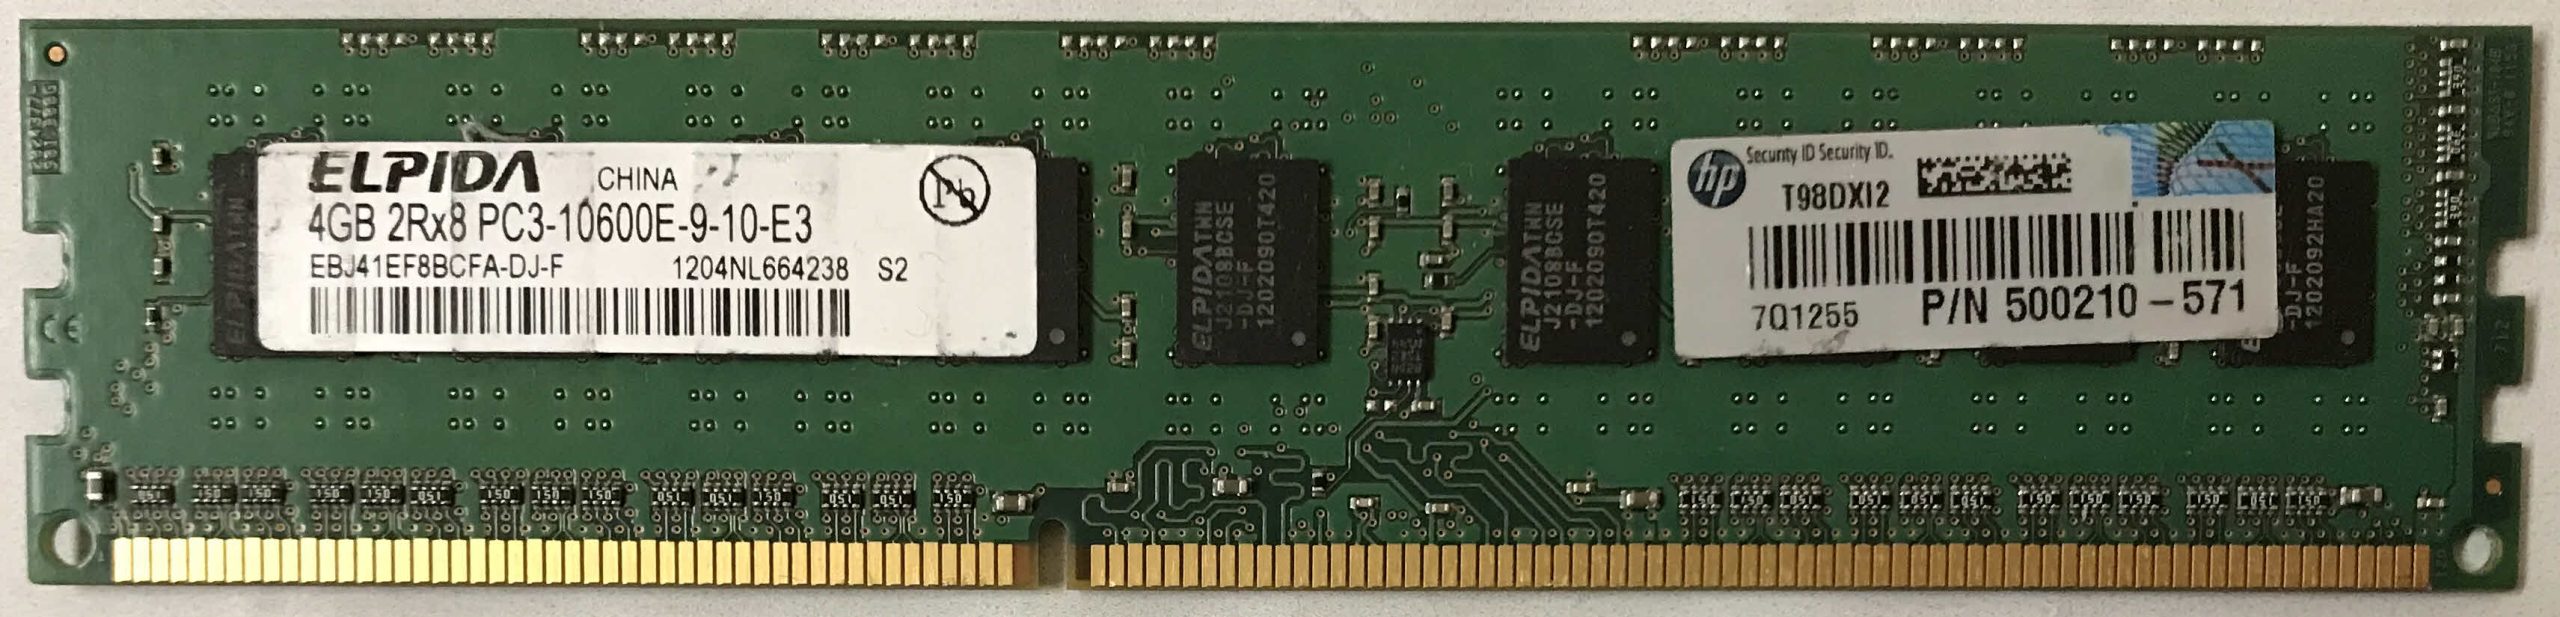 4GB 2Rx8 PC3-10600U-9-10-E3 Elpida